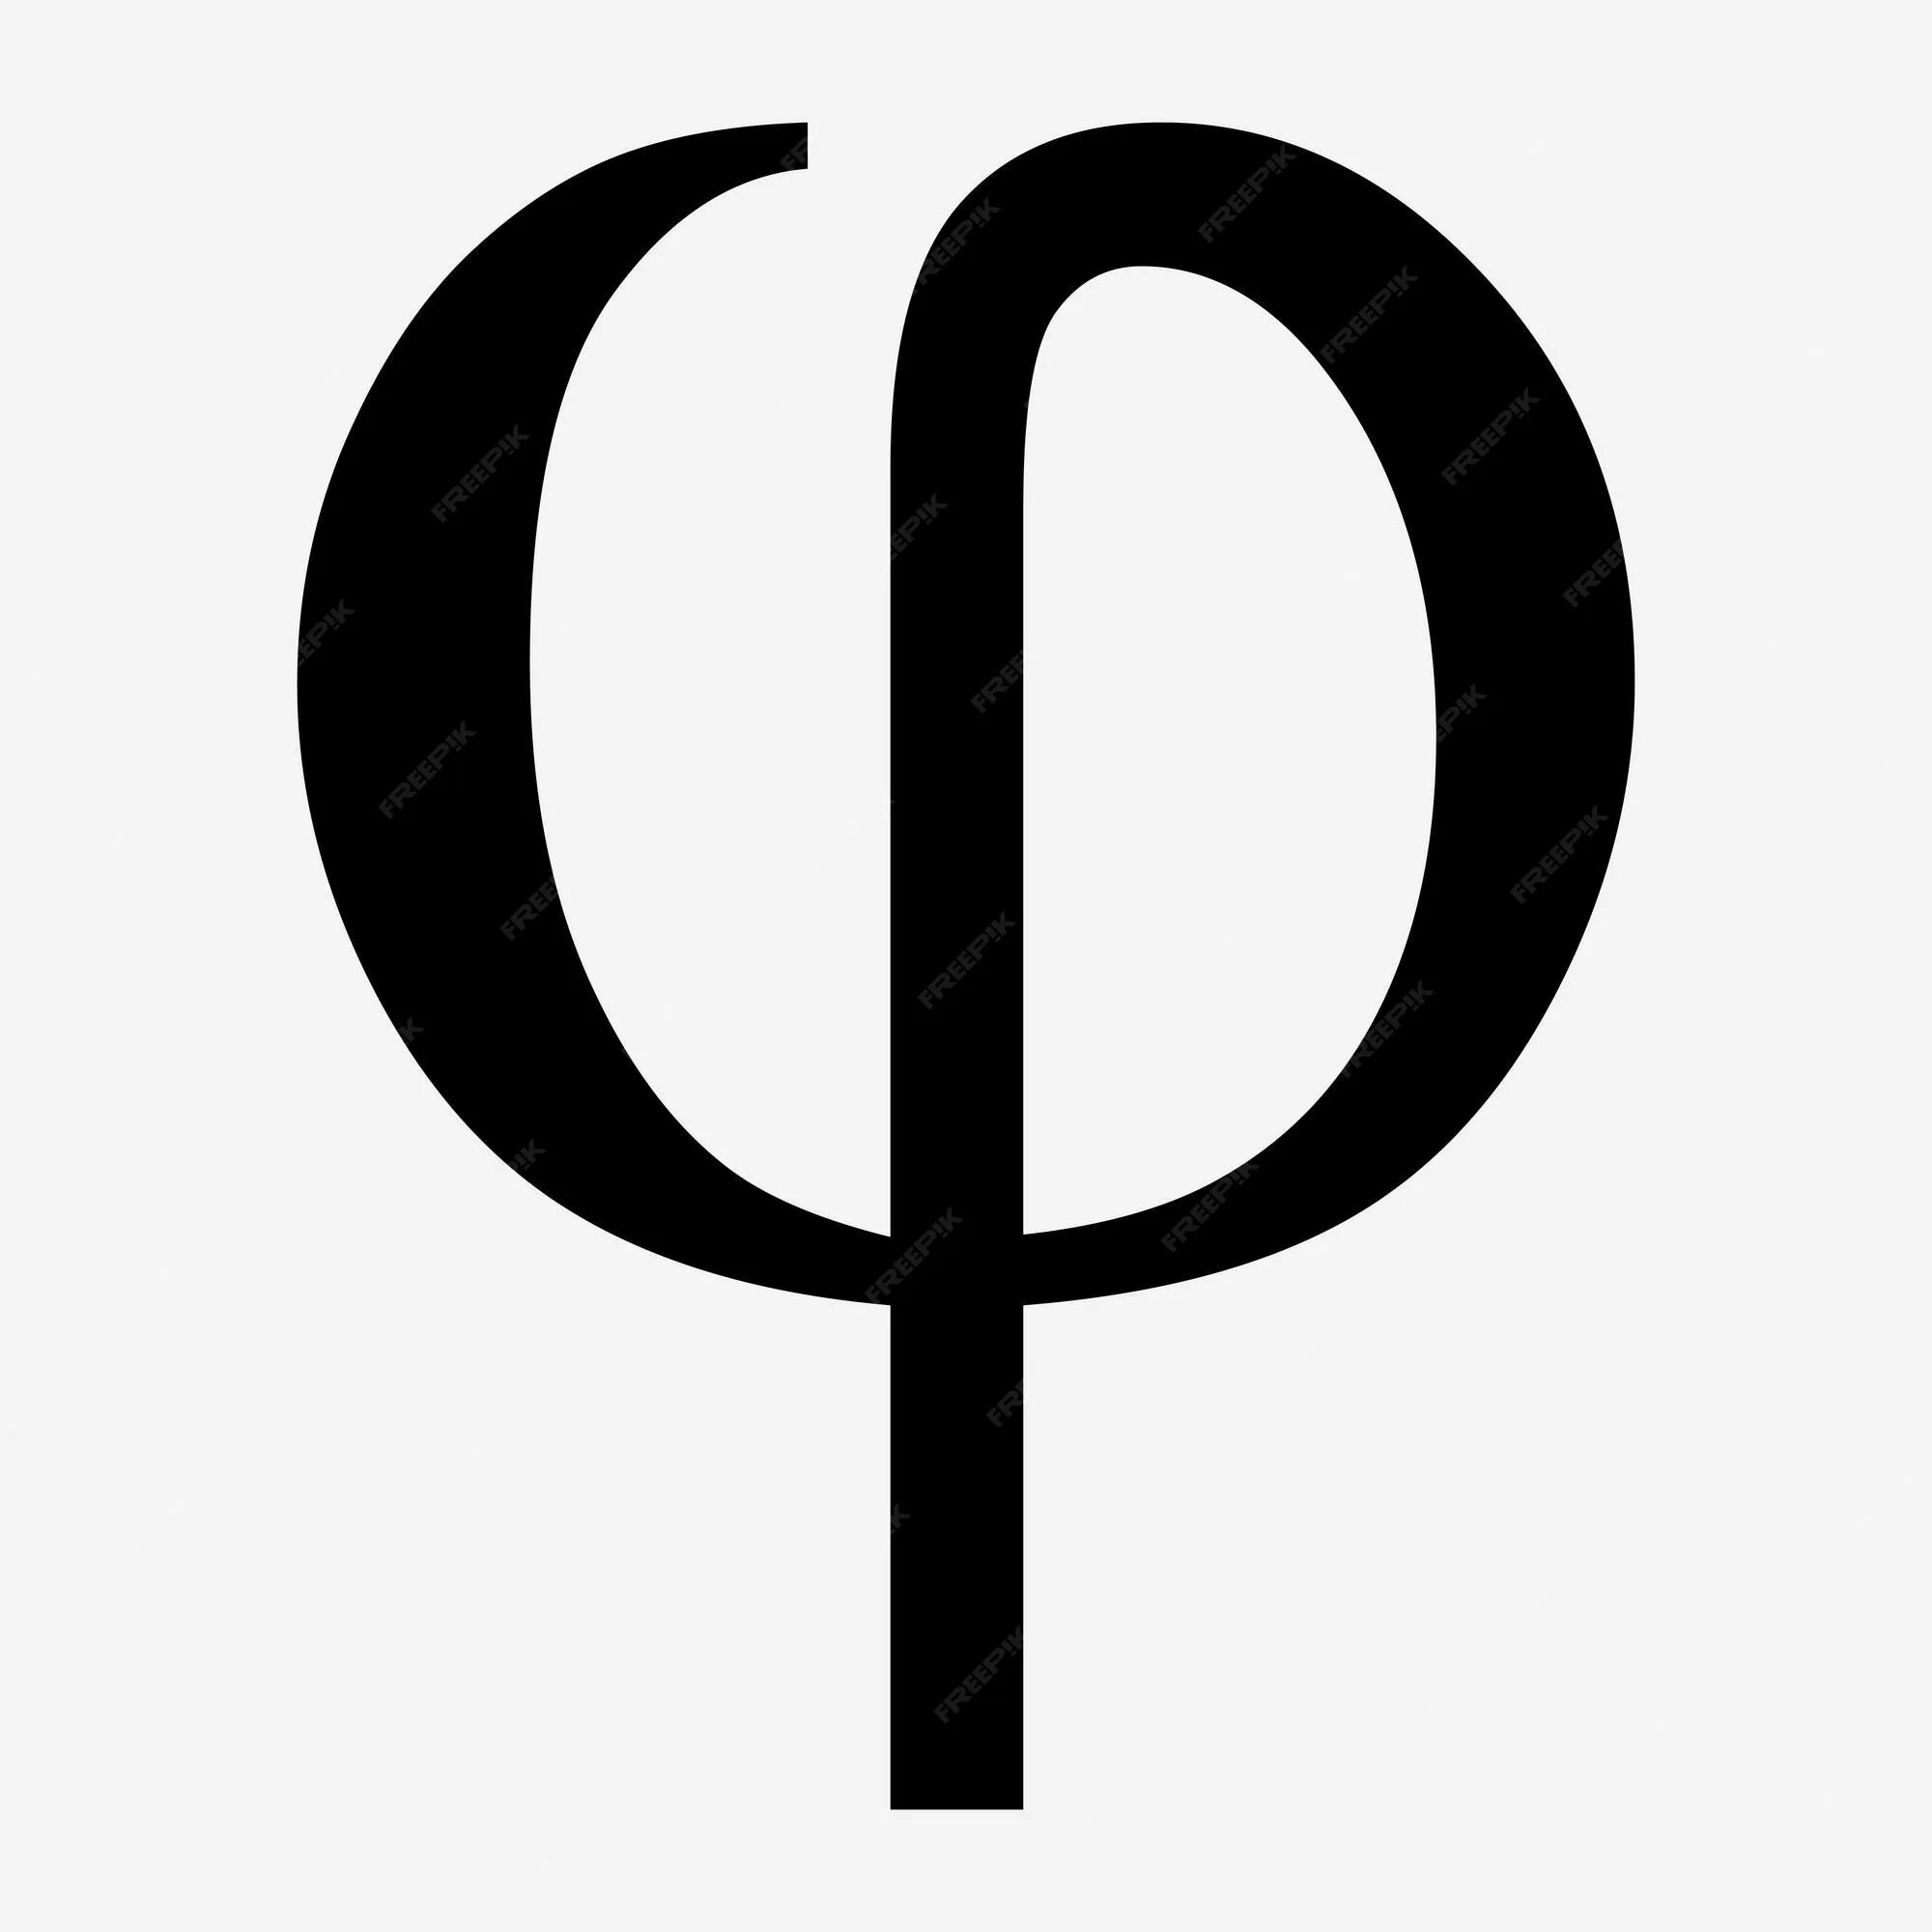 Фи. Фи буква греческого алфавита. Греческая буква фи символ. Число фи знак. Символ философии.